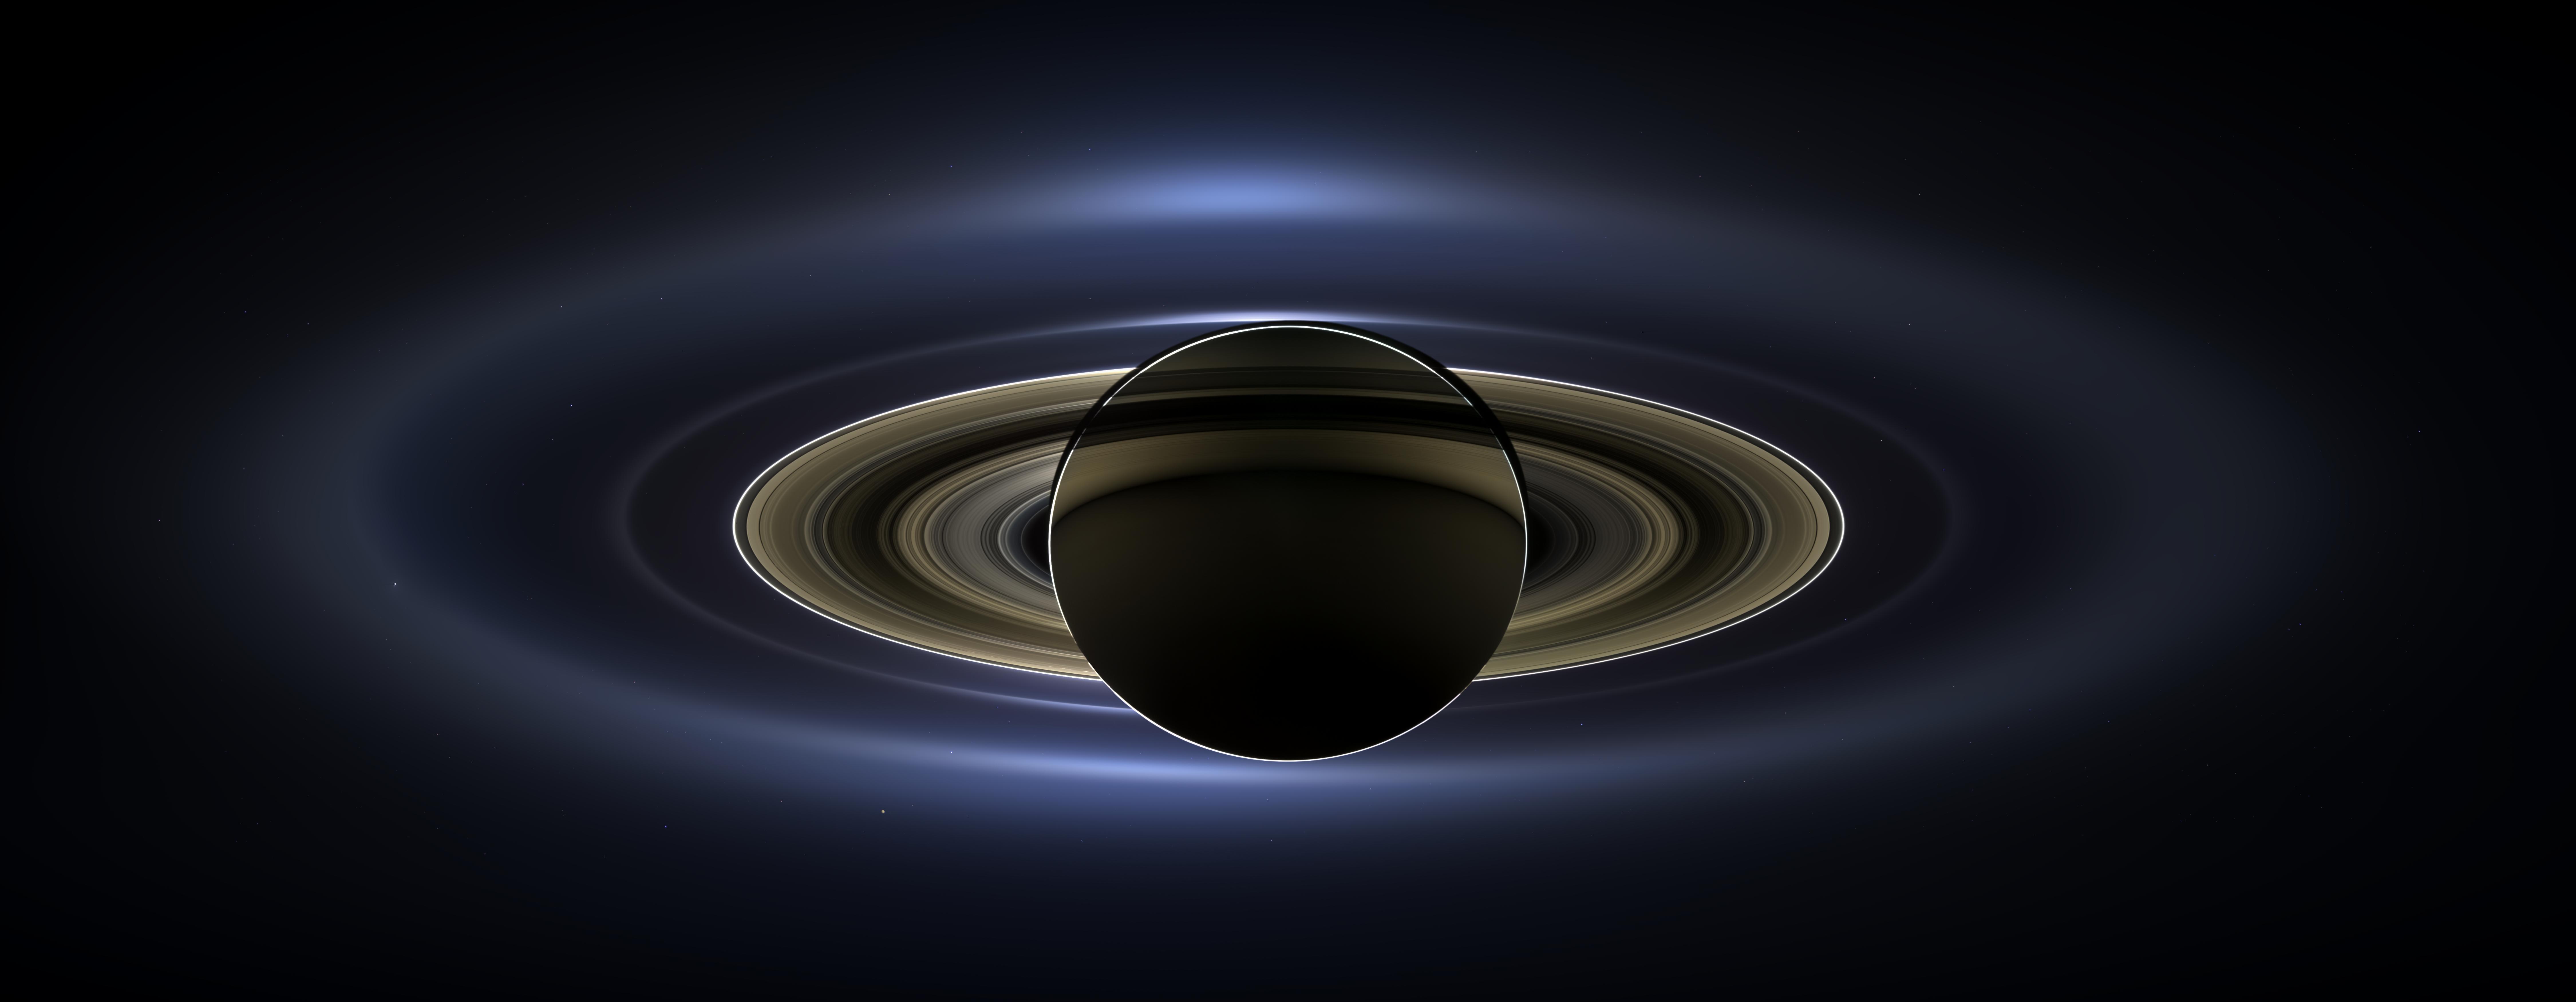 Image credit: NASA/JPL-Caltech/SSI